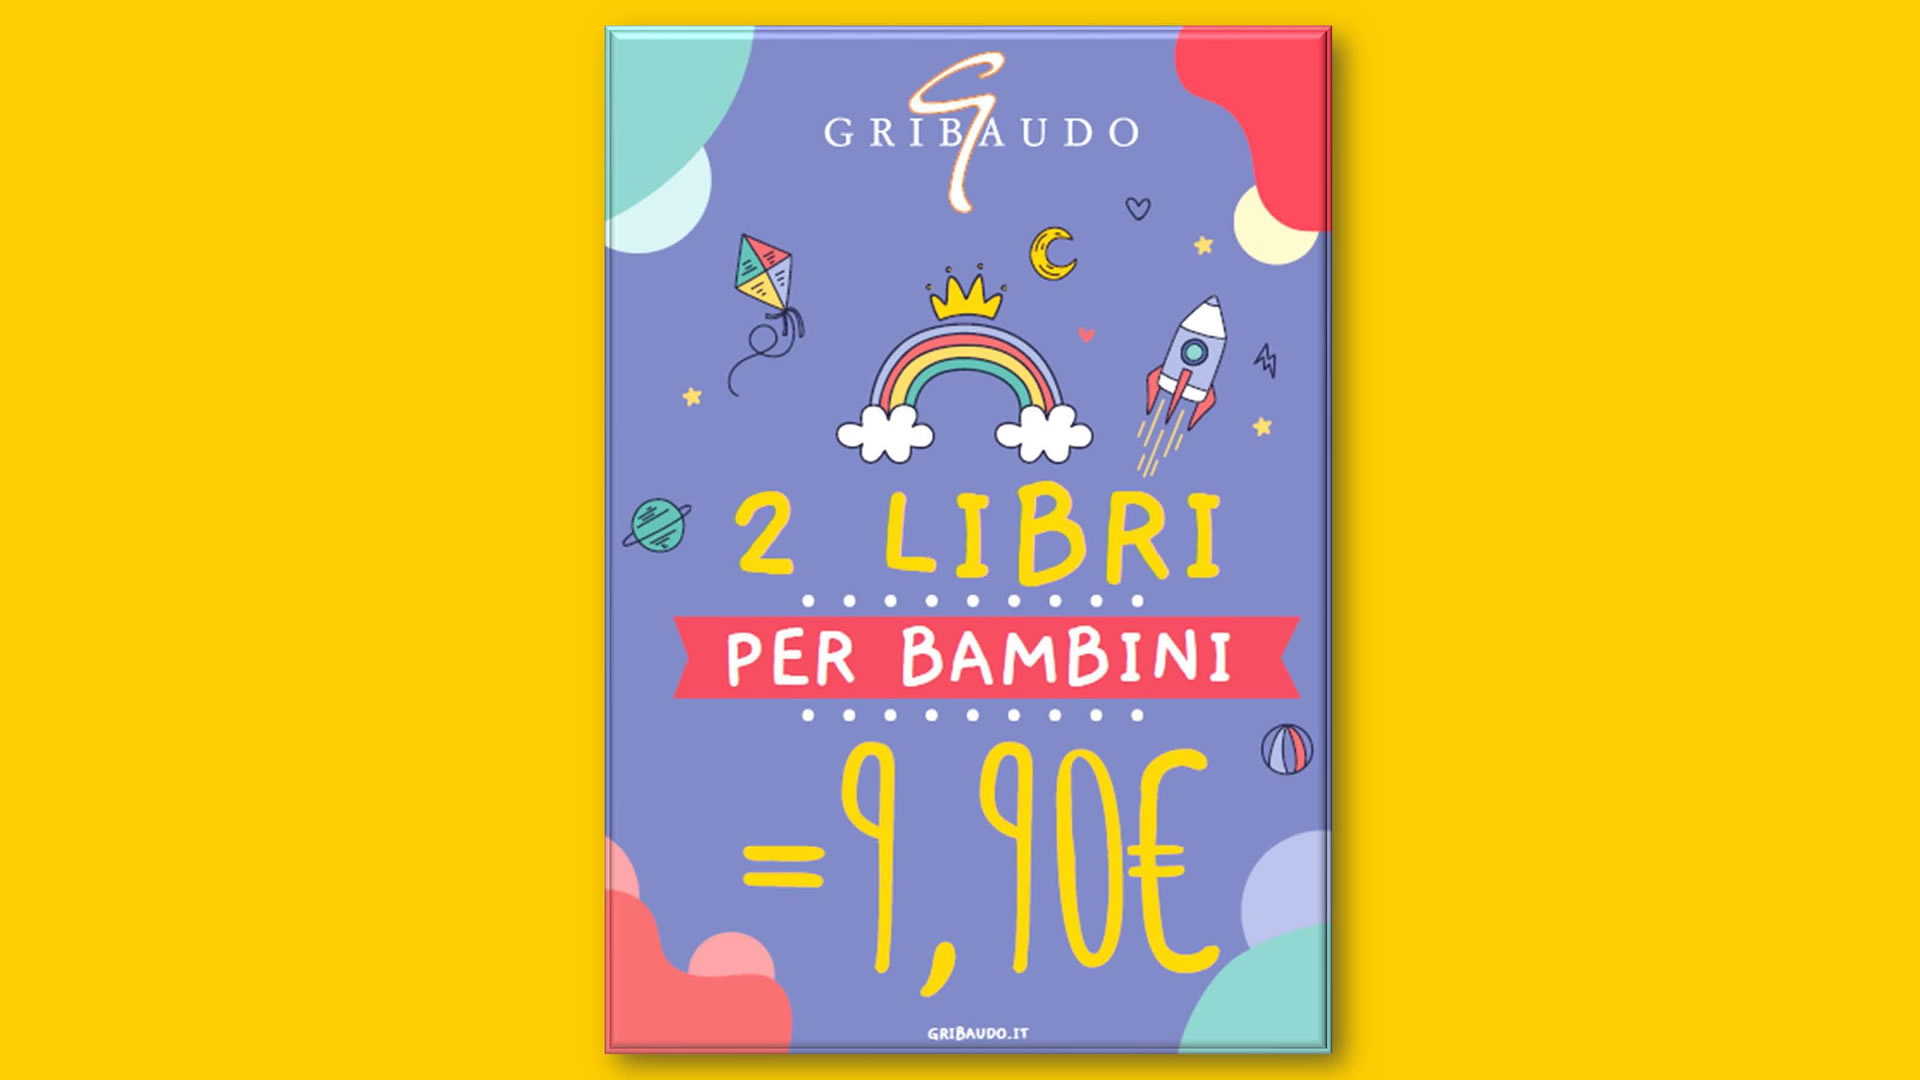 2 libri per Bambini Gribaudo a 9,90€